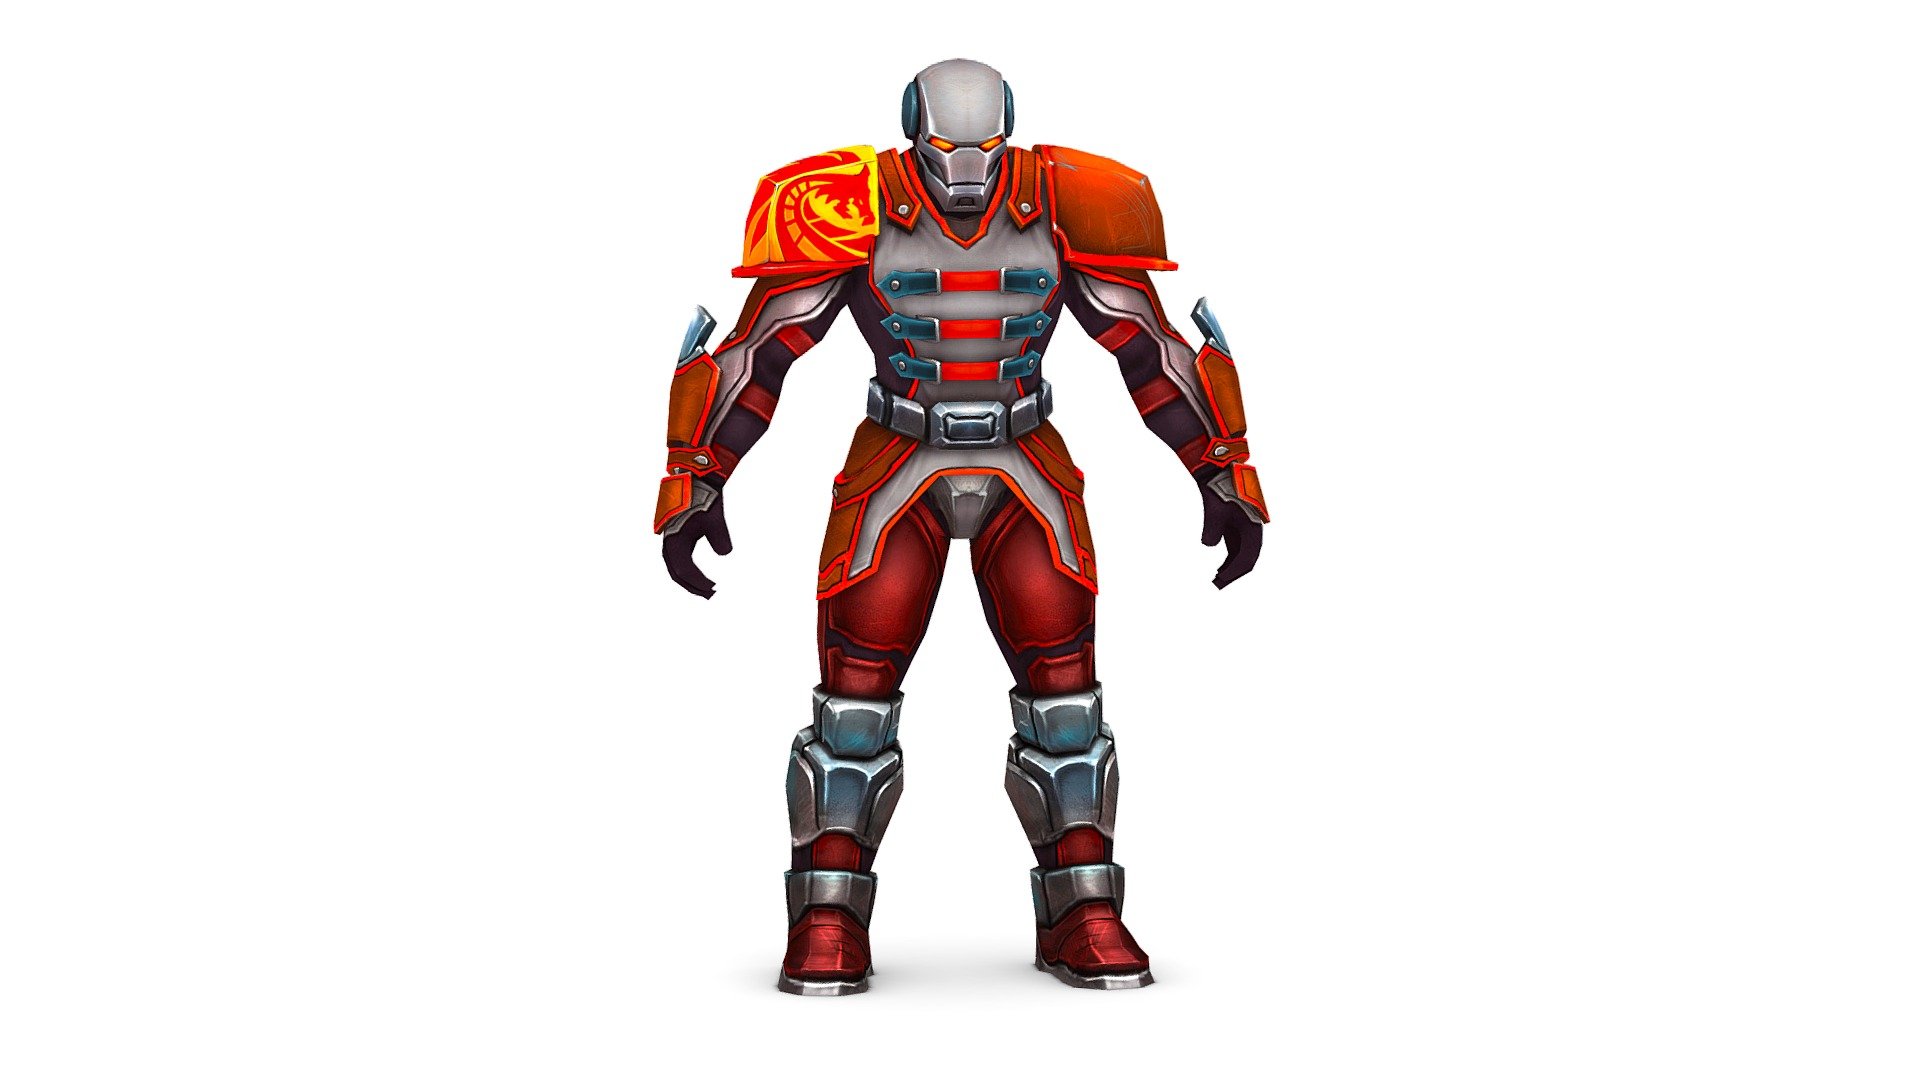 Low Poly Man Cyborg  Trooper Soldier  - 1024x1024 color texture only, no lights 3dsMax file included - Low Poly Man Cyborg  Trooper Soldier - Buy Royalty Free 3D model by Oleg Shuldiakov (@olegshuldiakov) 3d model